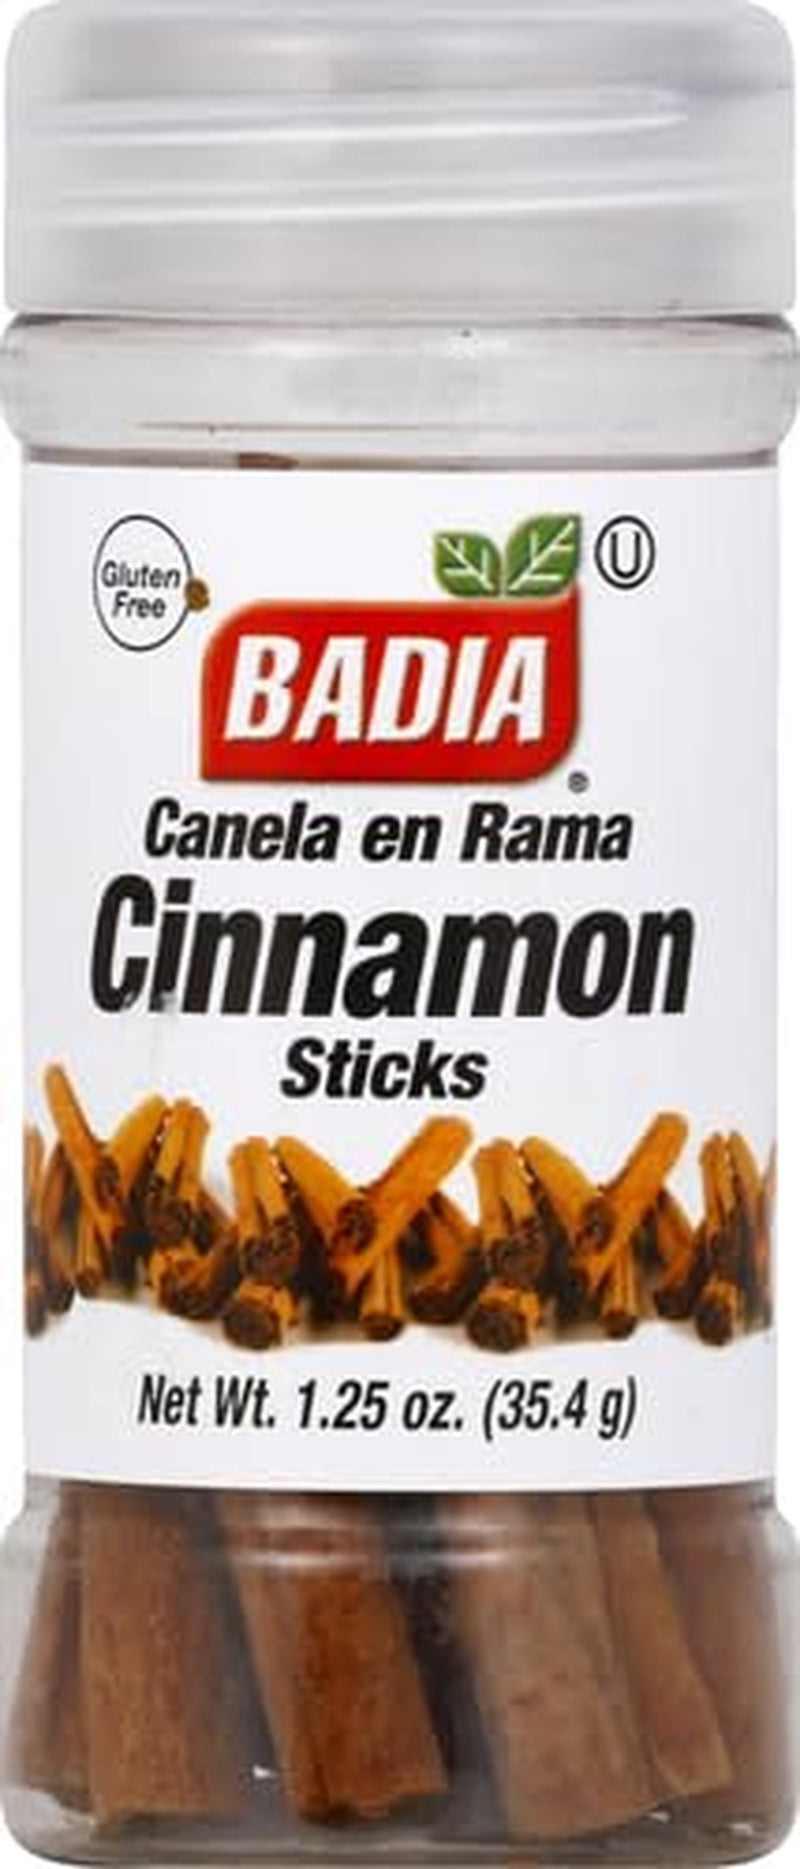 Cinnamon Sticks, 1.25 Oz.